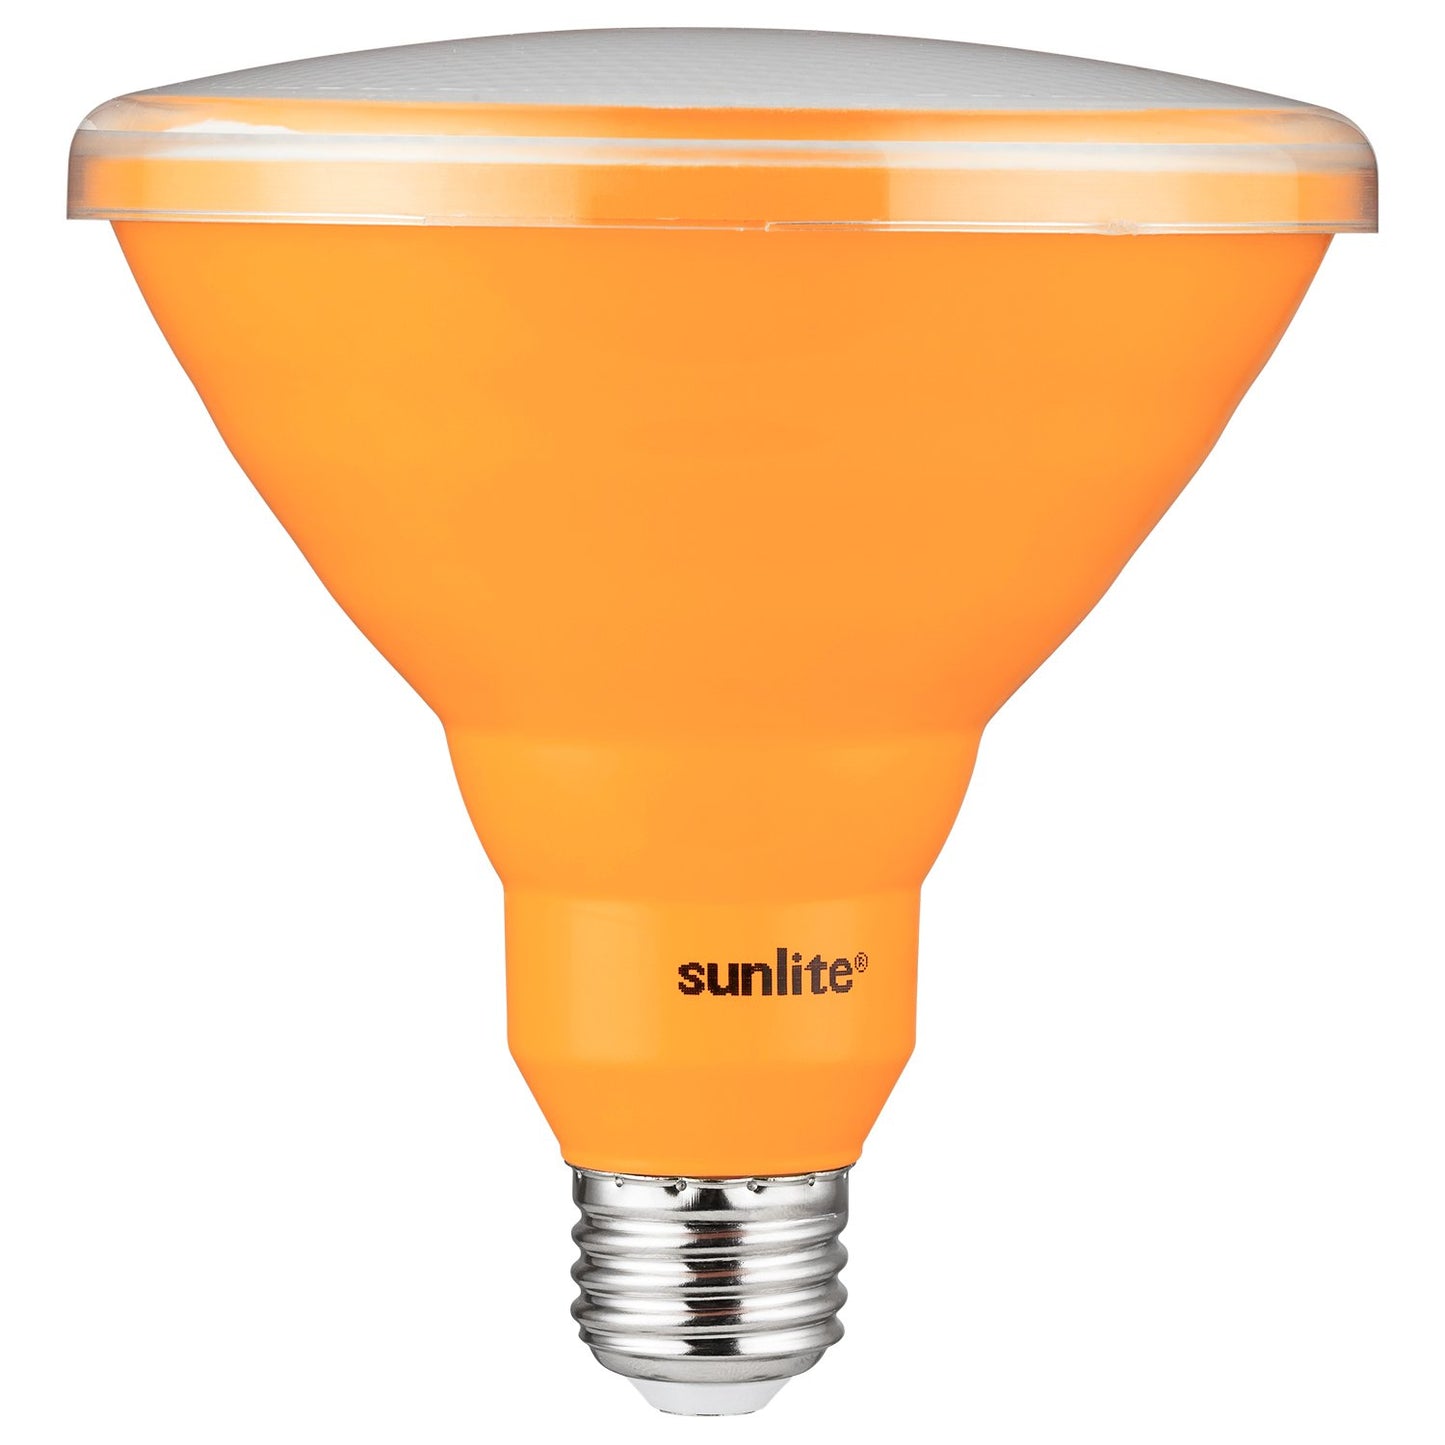 Sunlite - Amber LED PAR38 Reflector Light Bulb, 4 Watt, 120-220 Volts, Medium Base, 30,000 Hour Lamp Life, 150 Lumens, 30° Narrow Flood, Energy Saving, Turtle Safe, Indoor/Outdoor (6 Pack)